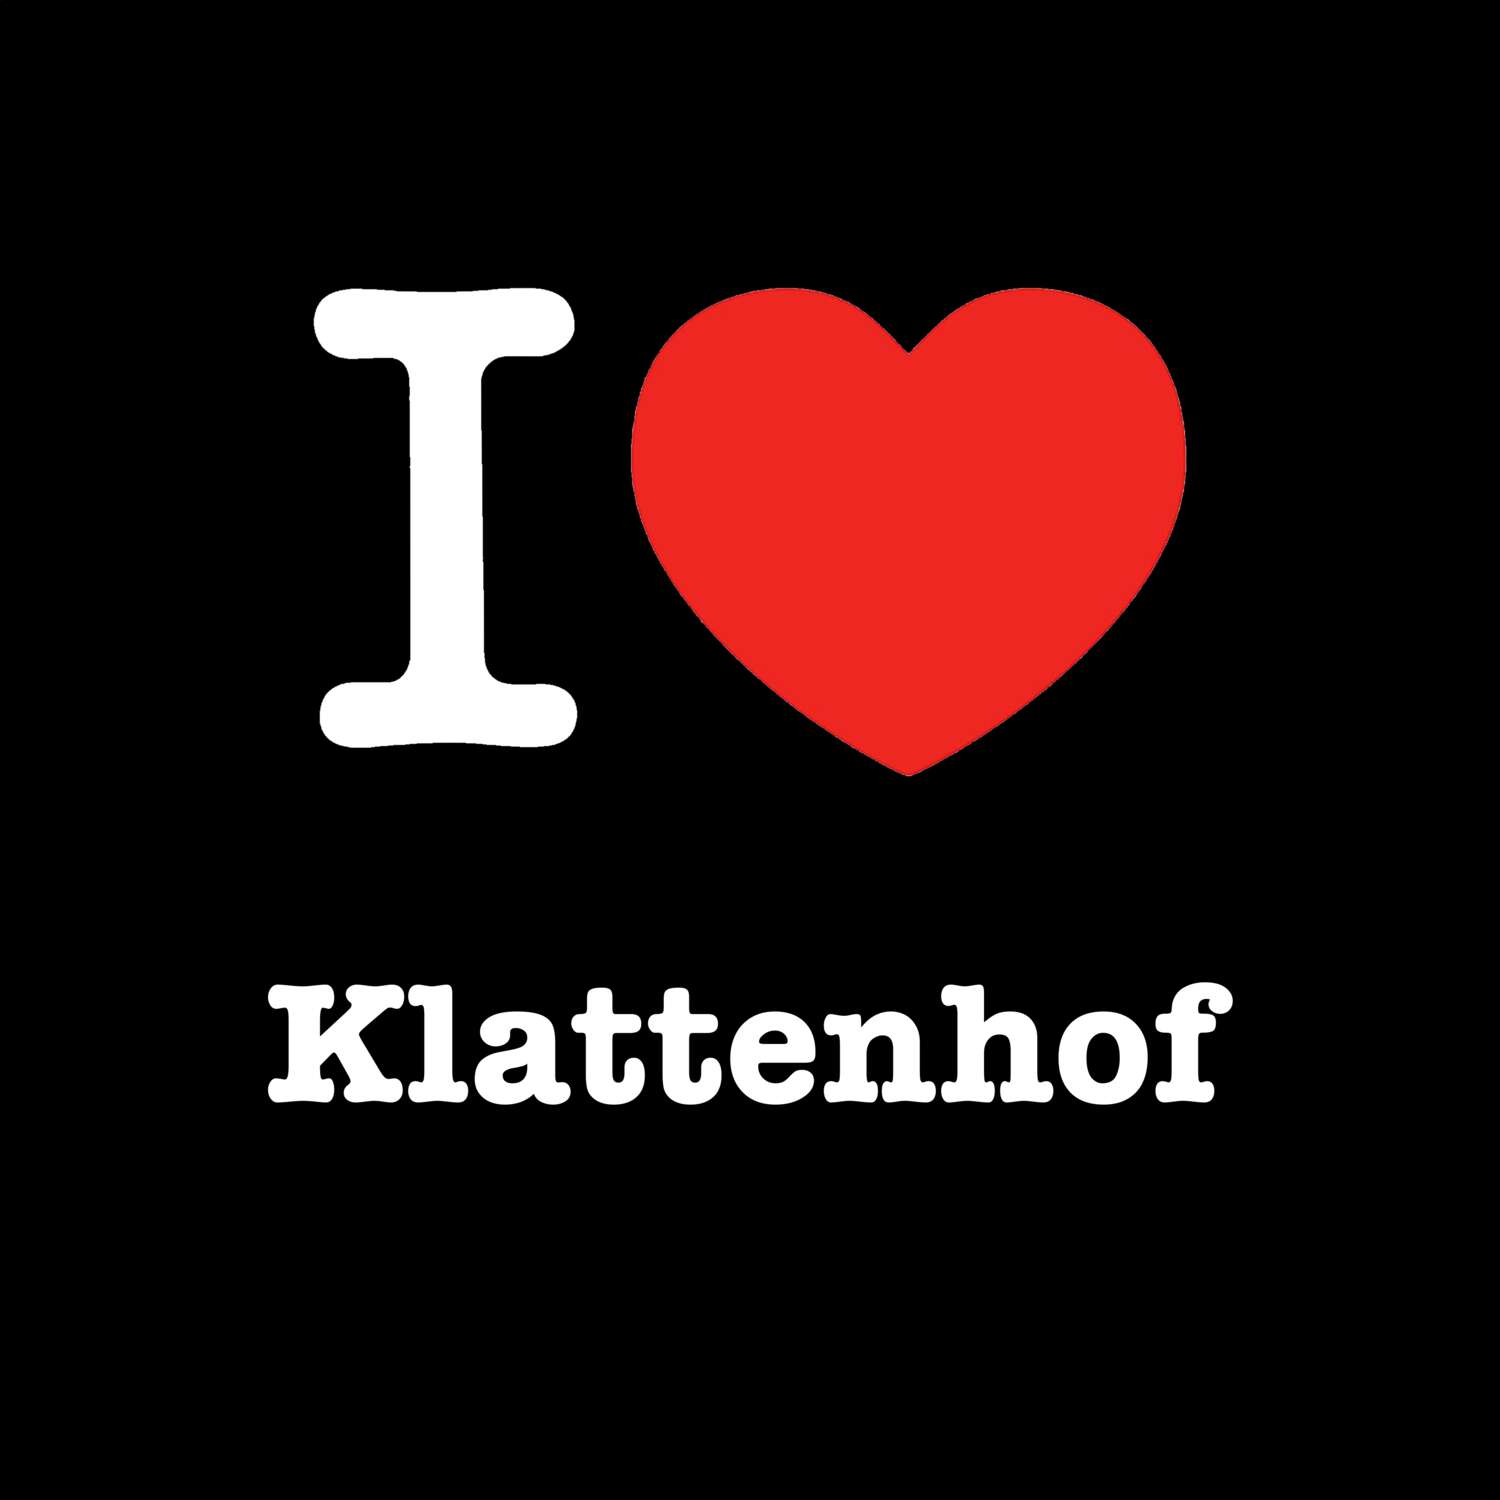 Klattenhof T-Shirt »I love«